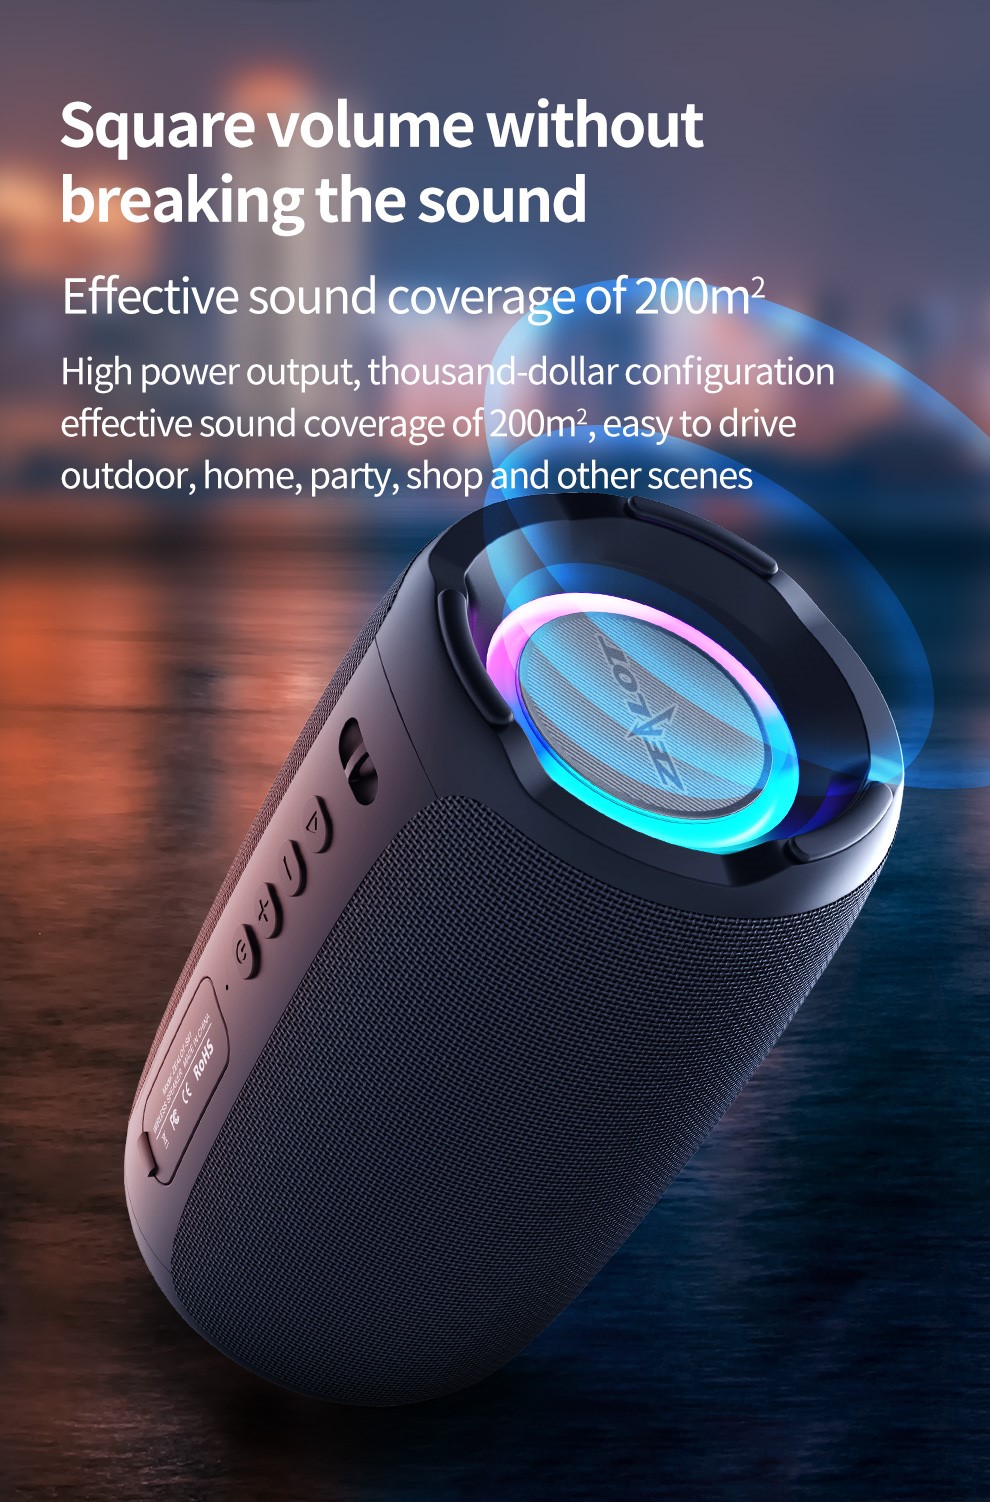 Zealot S61 bluetooth Speaker Portable Speaker Double Bass Diaphragm RGB Light TWS TF Card AUX Wireless Subwoofer Outdoor Speaker